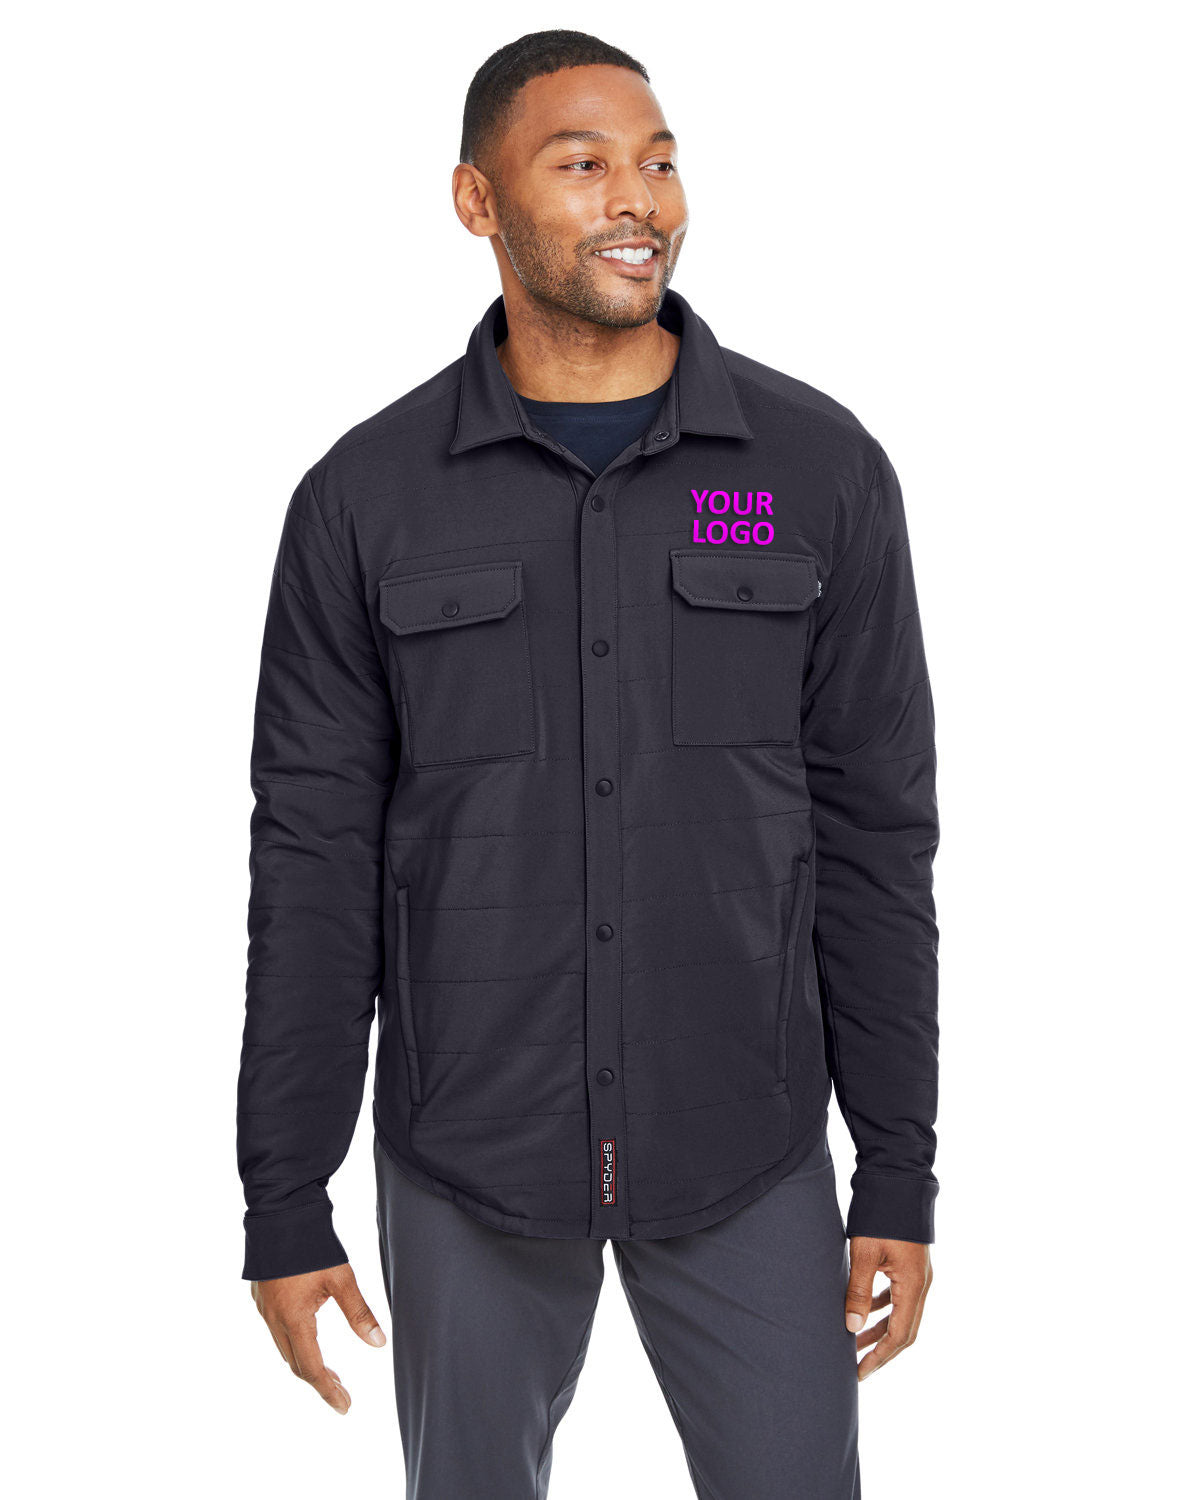 business jackets with logo Spyder BLACK S17030